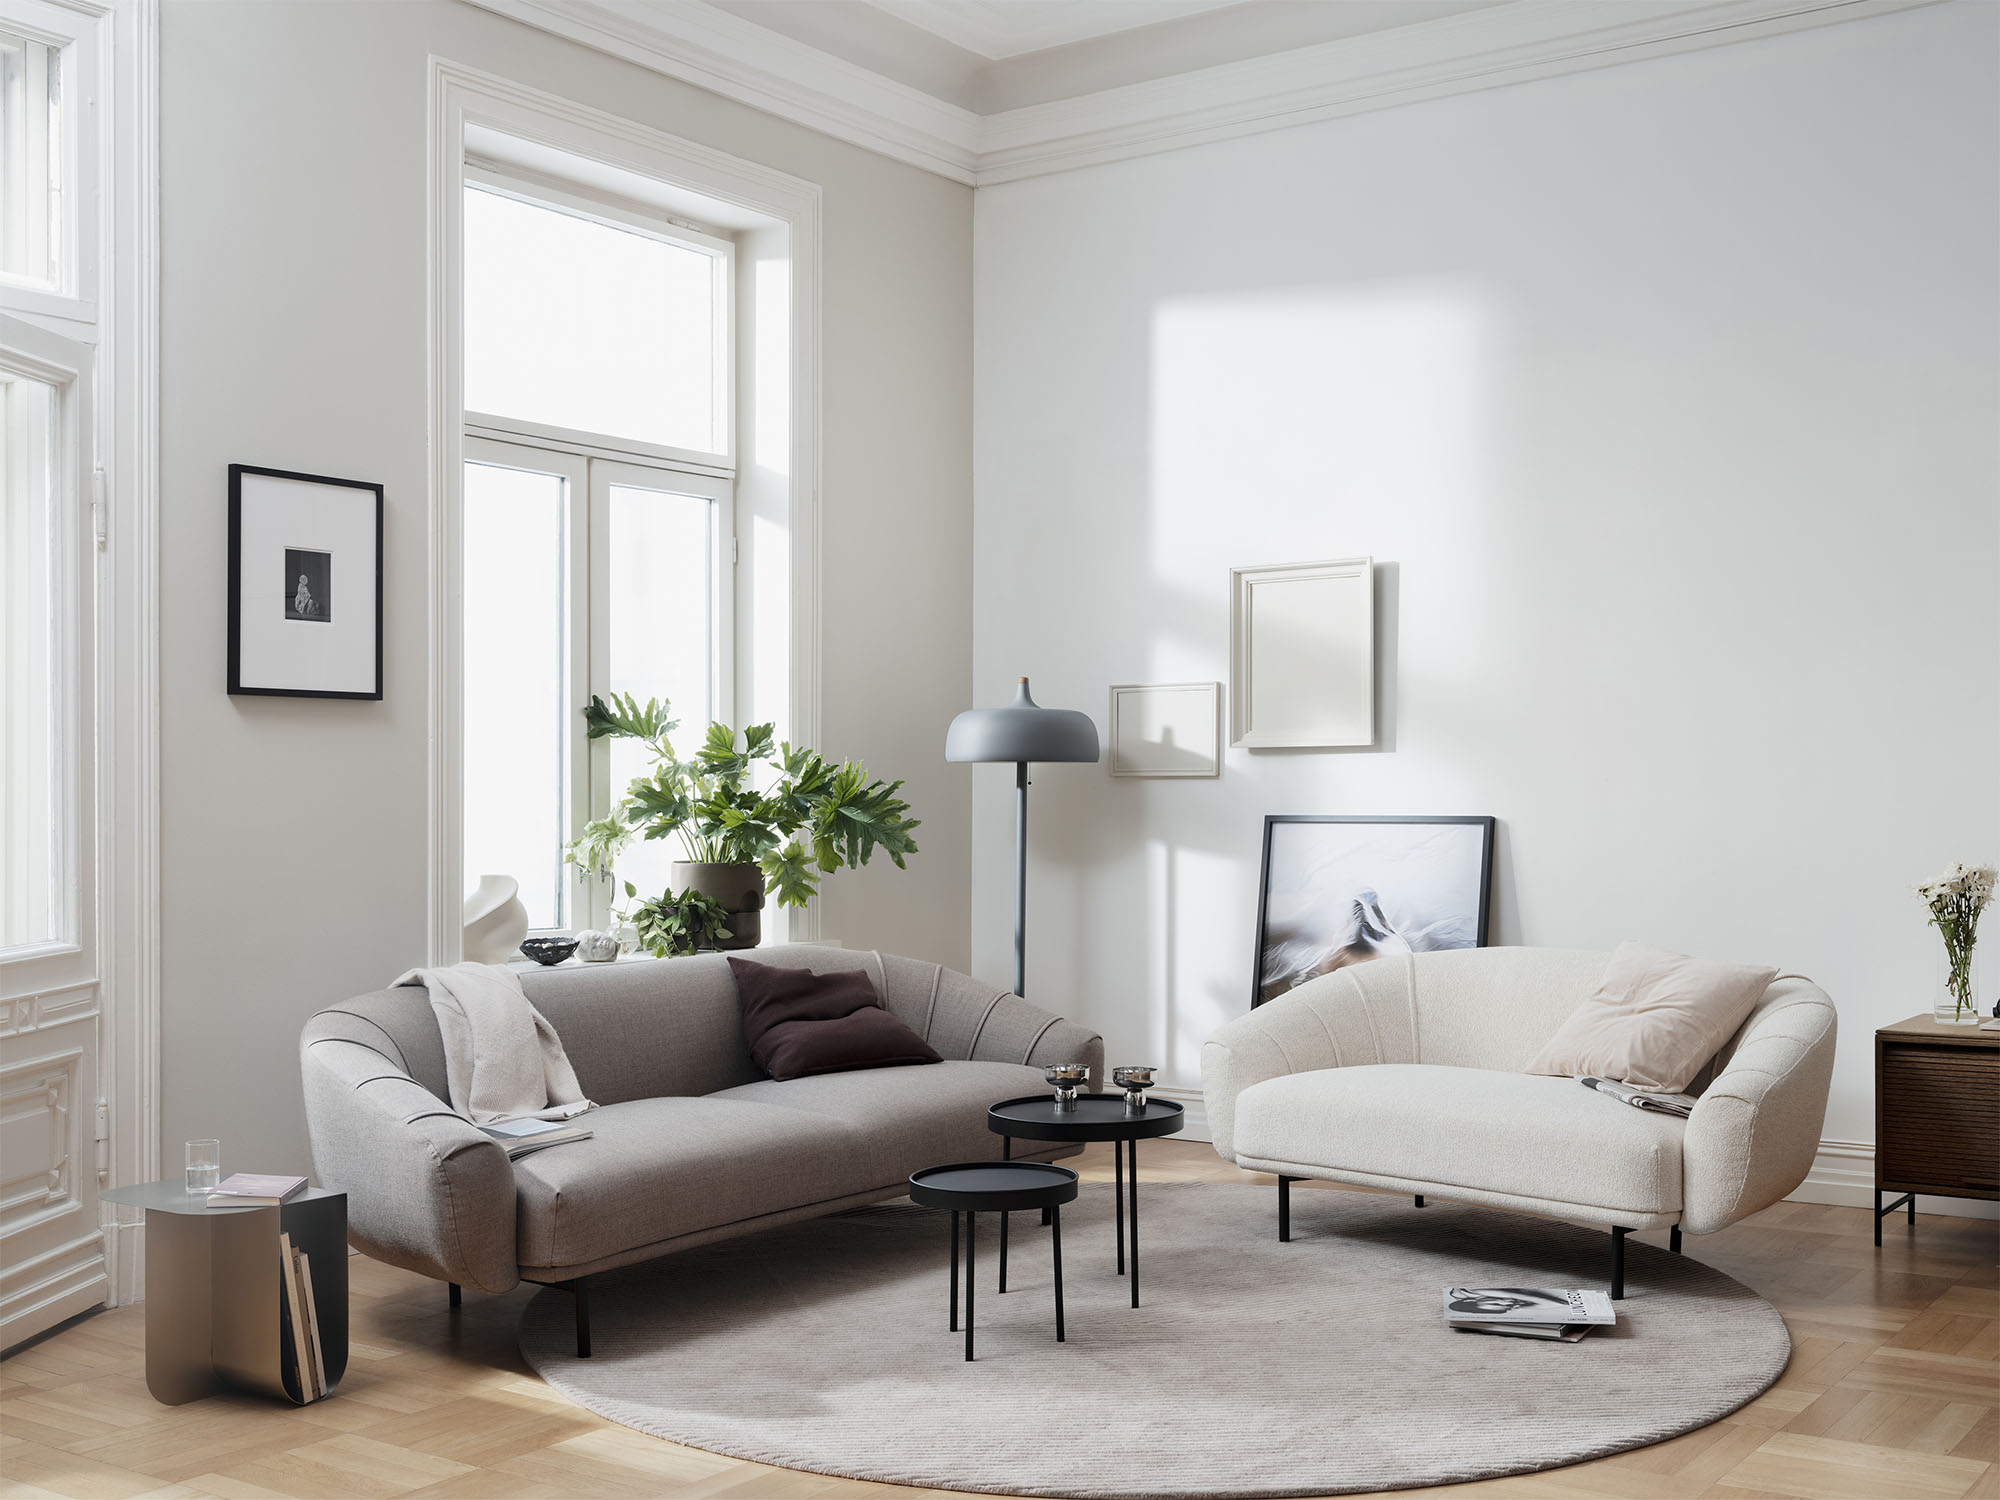 Plis_sofa_3_2-seater_livingroom_landscape_Northern_Ph_Einar_Aslaksen_Low-res